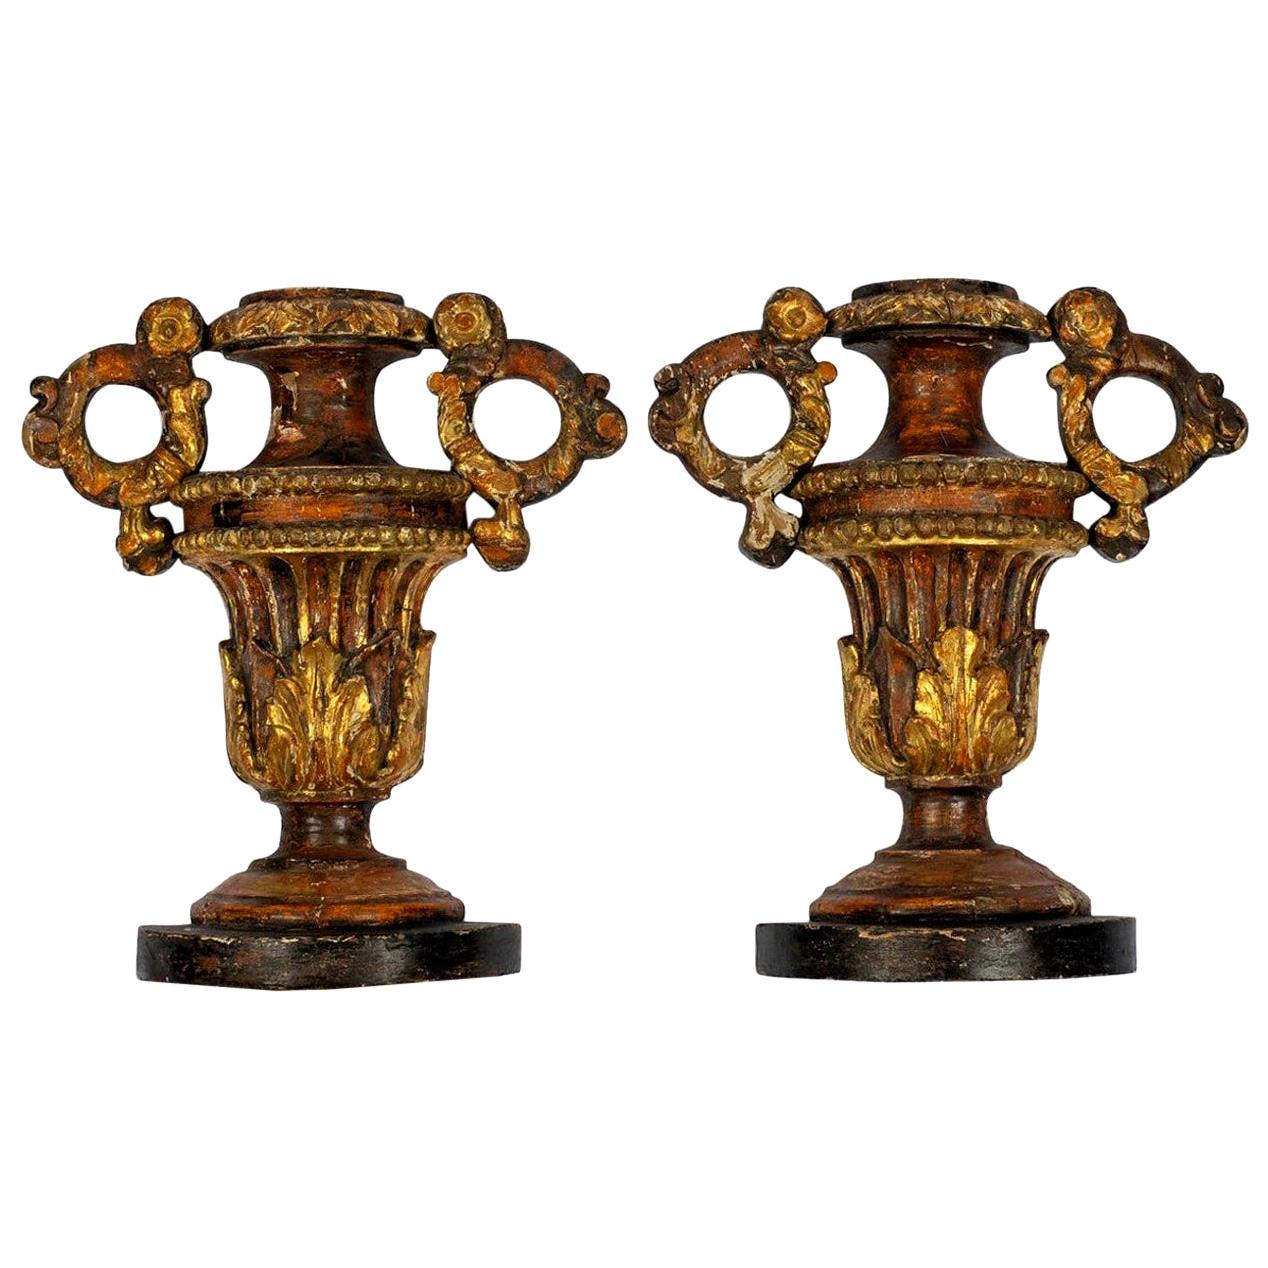 Pair of 18th Century Italian Giltwood Urn Ornaments